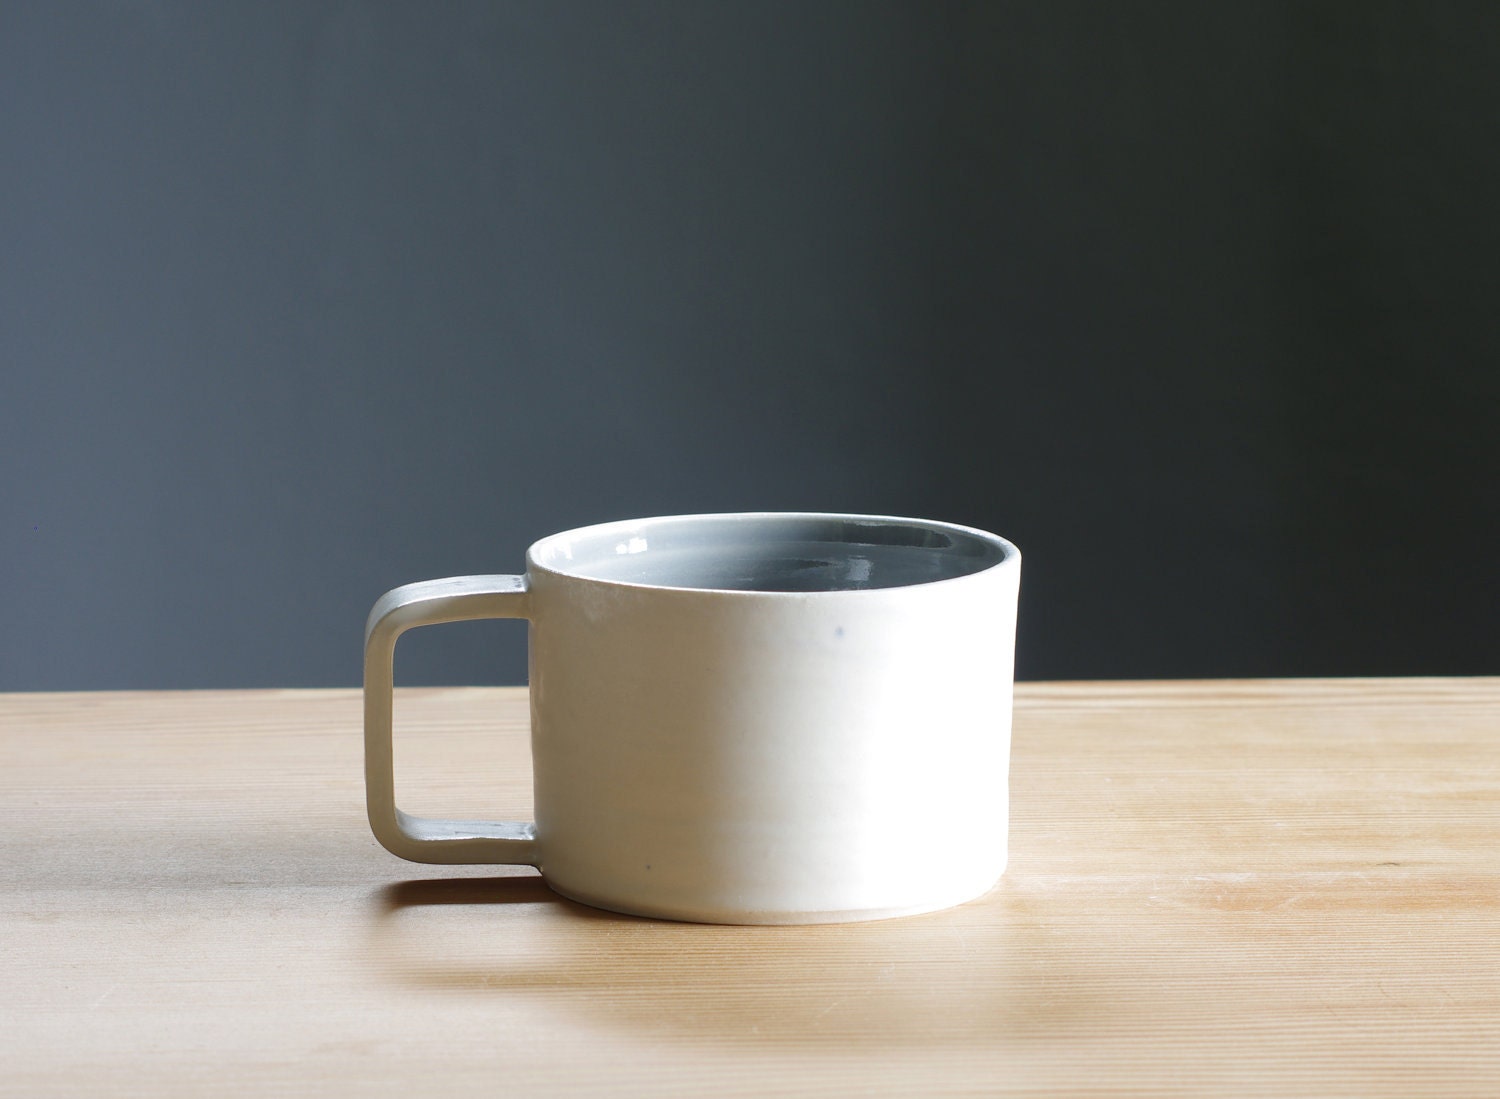 ready made one large white porcelain mug with grey interior glaze by vitrifiedstudio - vitrifiedstudio